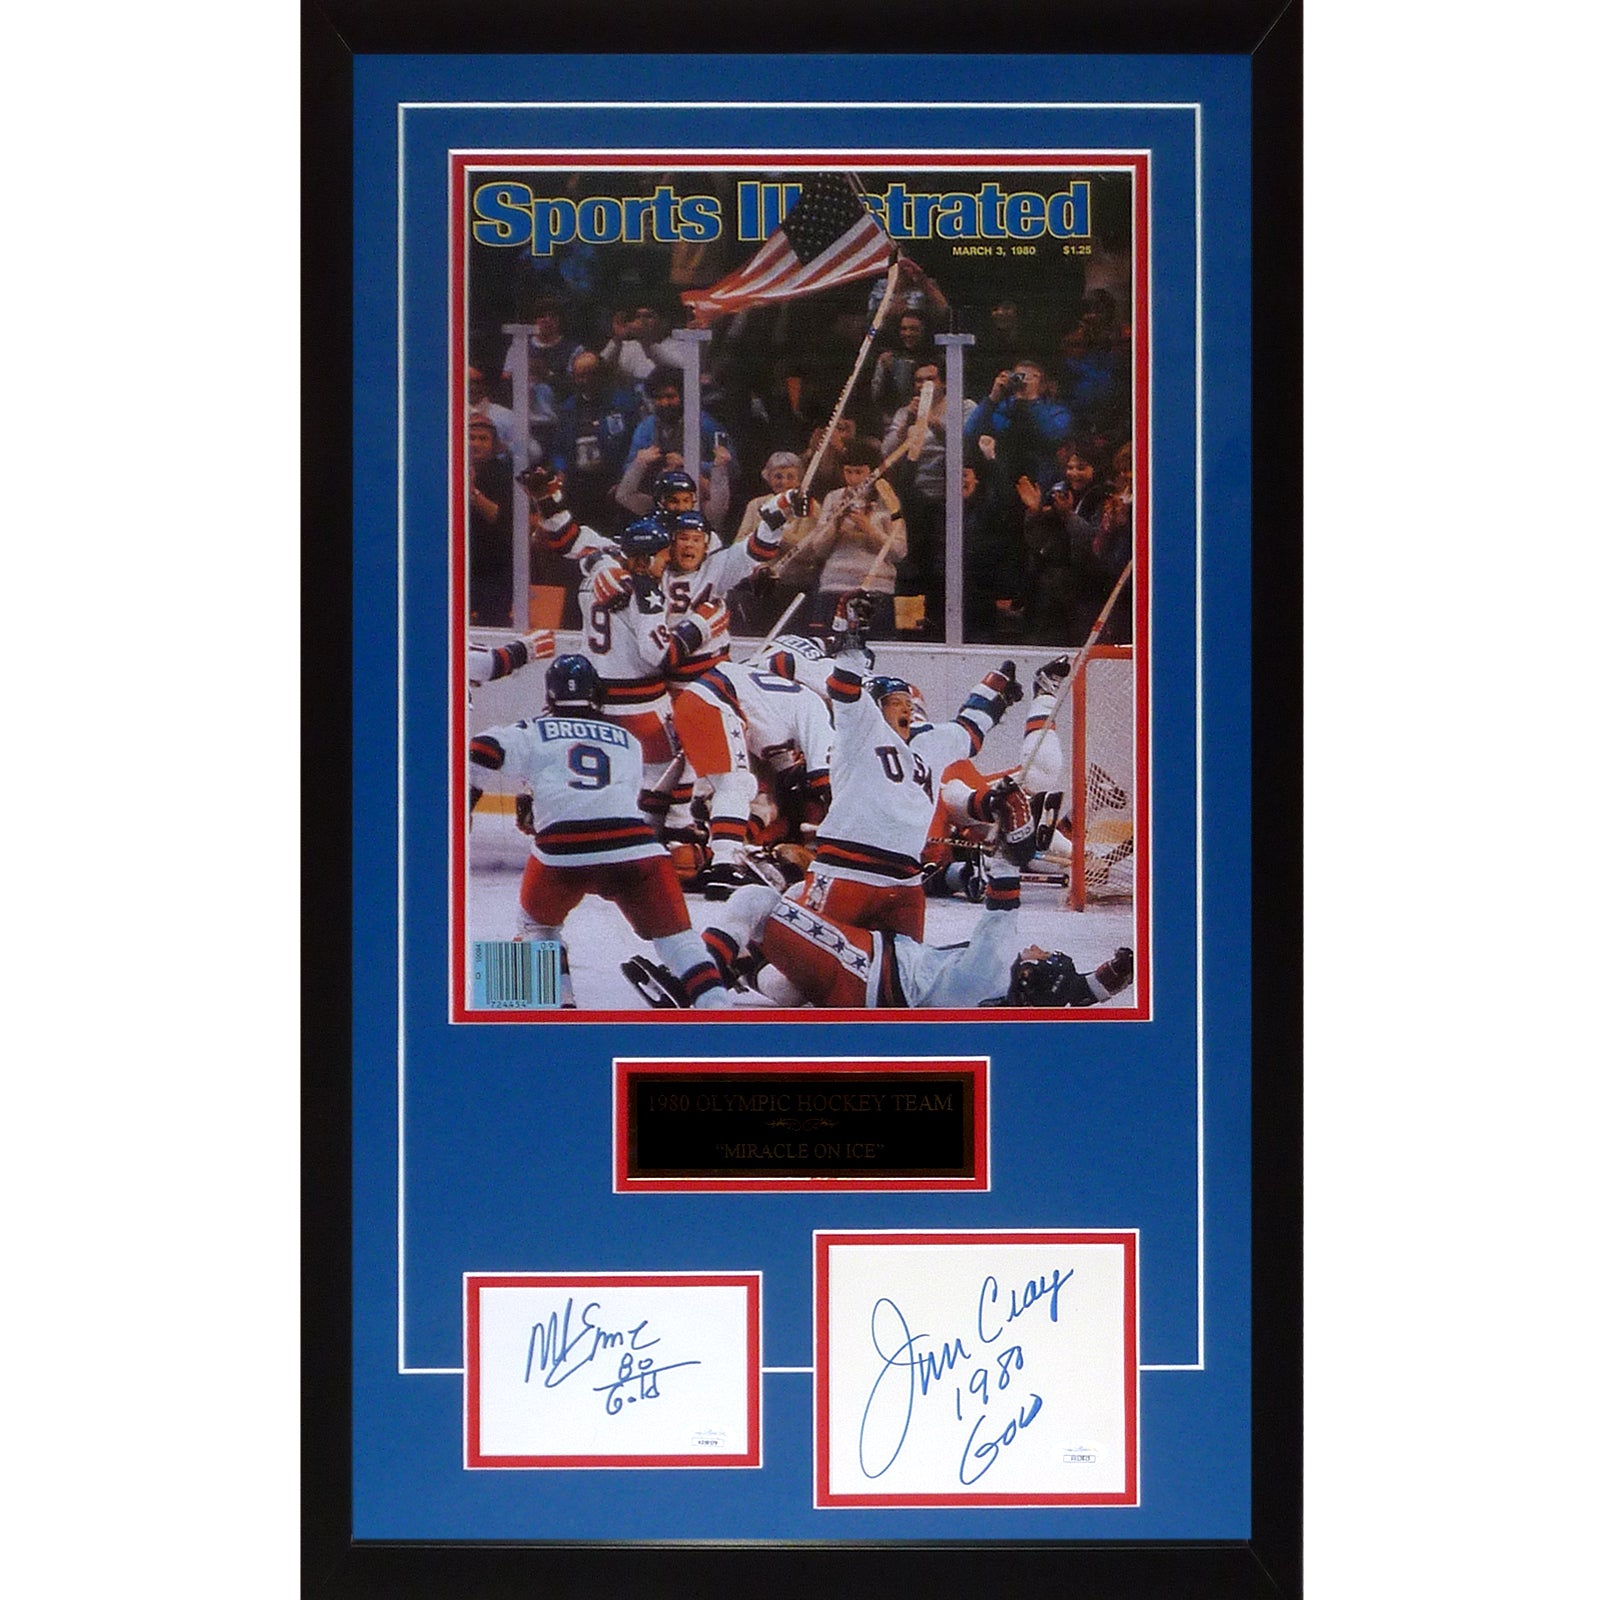 1980 U.S. Olympic Hockey Team Autographed (USA White #80) Deluxe Frame –  Palm Beach Autographs LLC